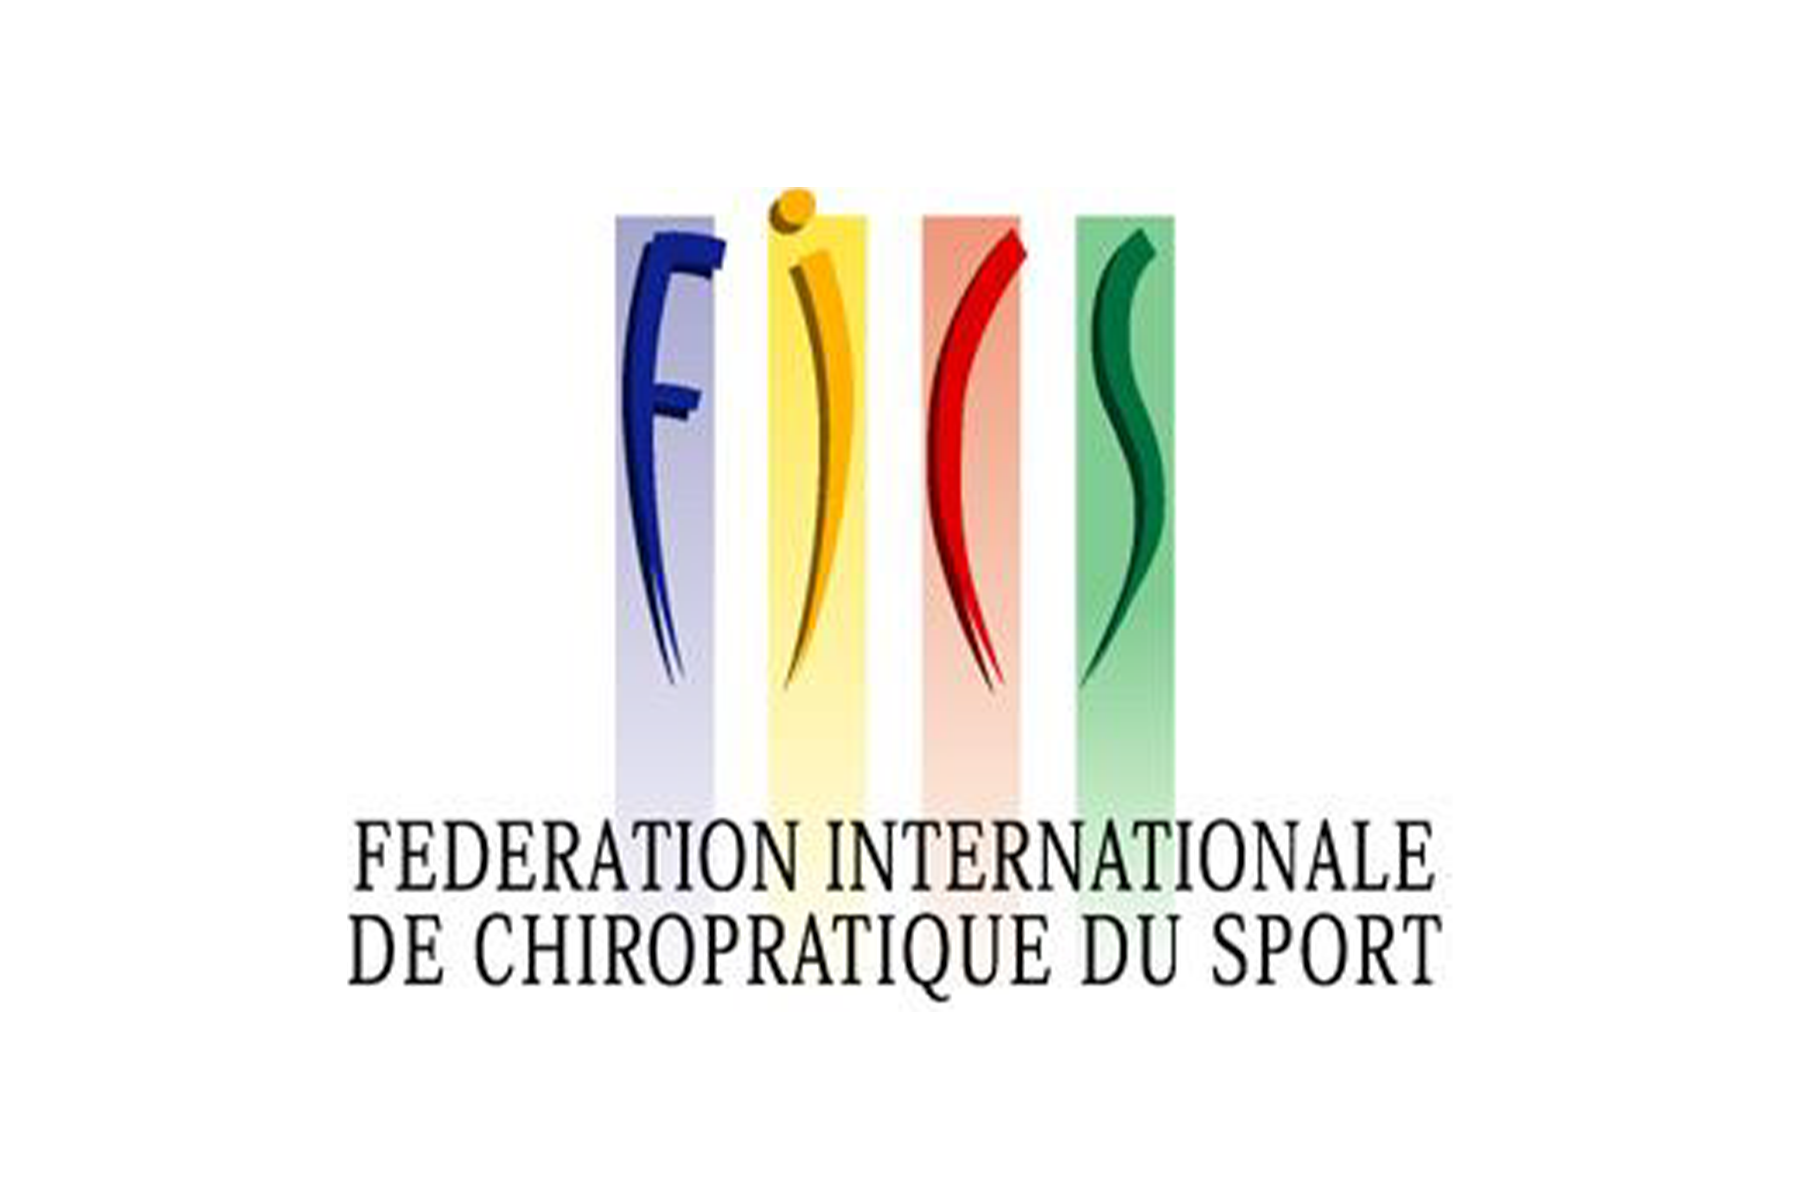 International Federation of Sports Chiropractic